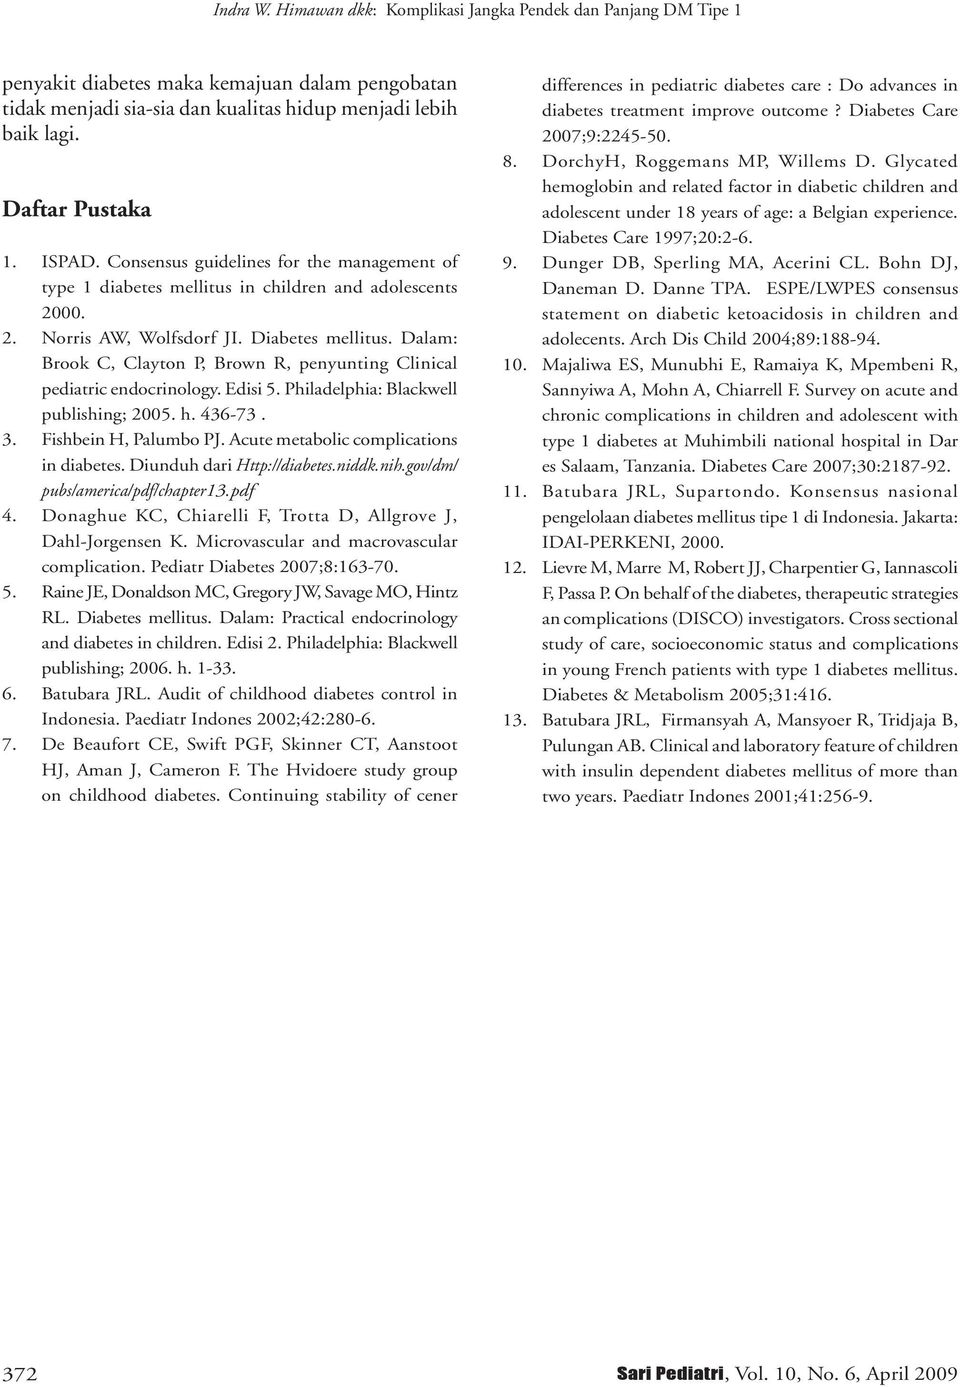 Dalam: Brook C, Clayton P, Brown R, penyunting Clinical pediatric endocrinology. Edisi 5. Philadelphia: Blackwell publishing; 25. h. 436-73. 3. Fishbein H, Palumbo PJ.